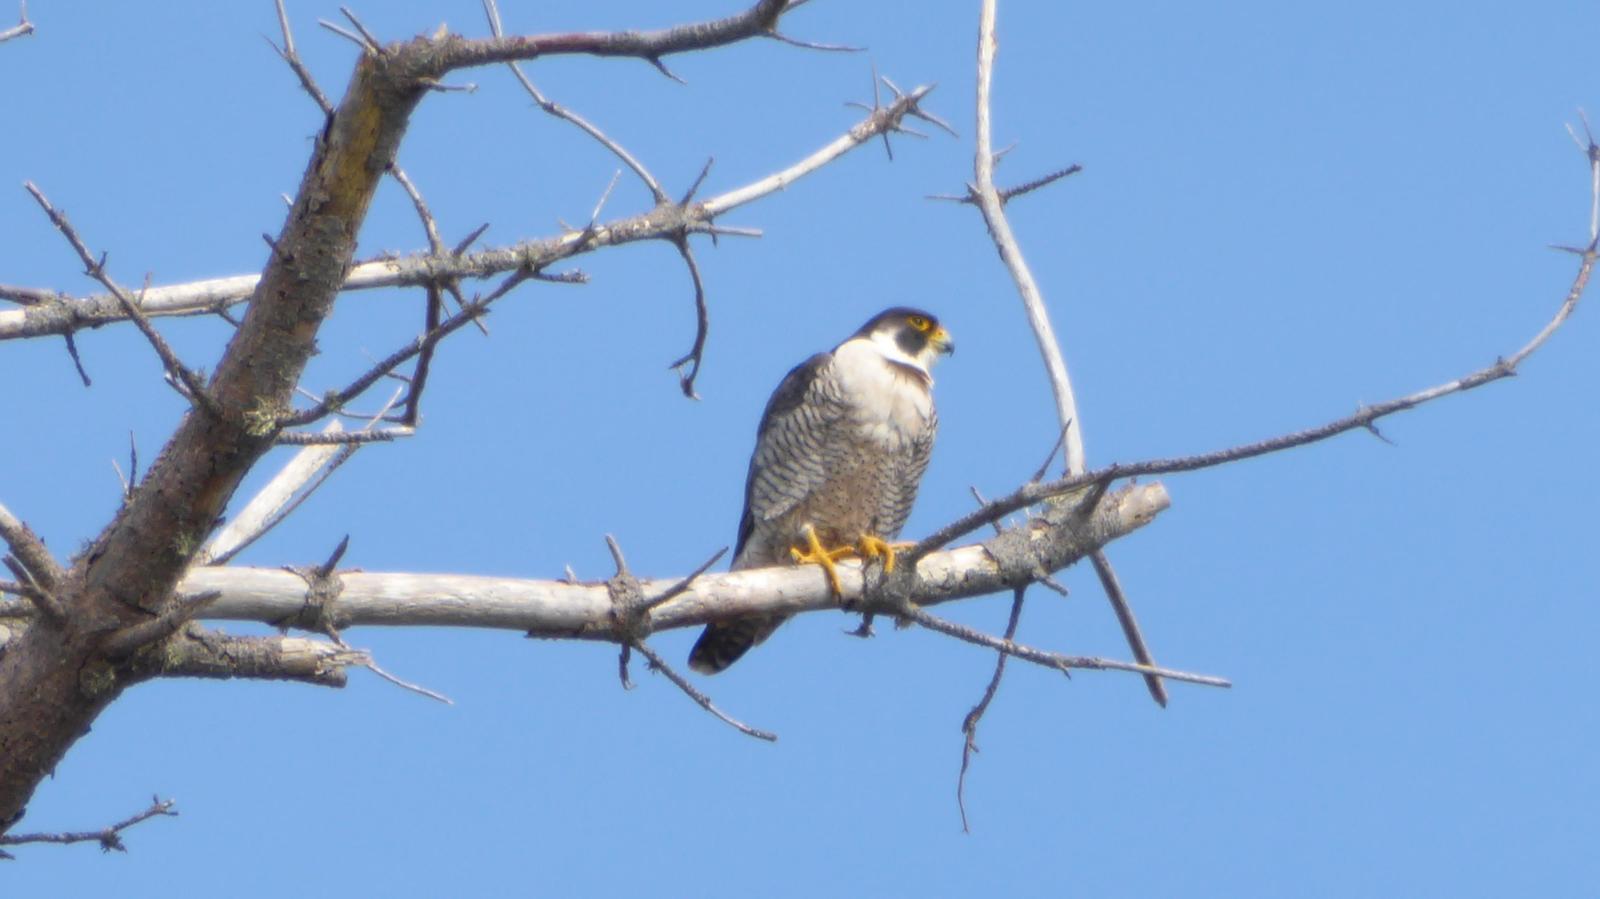 Peregrine Falcon Photo by Daliel Leite